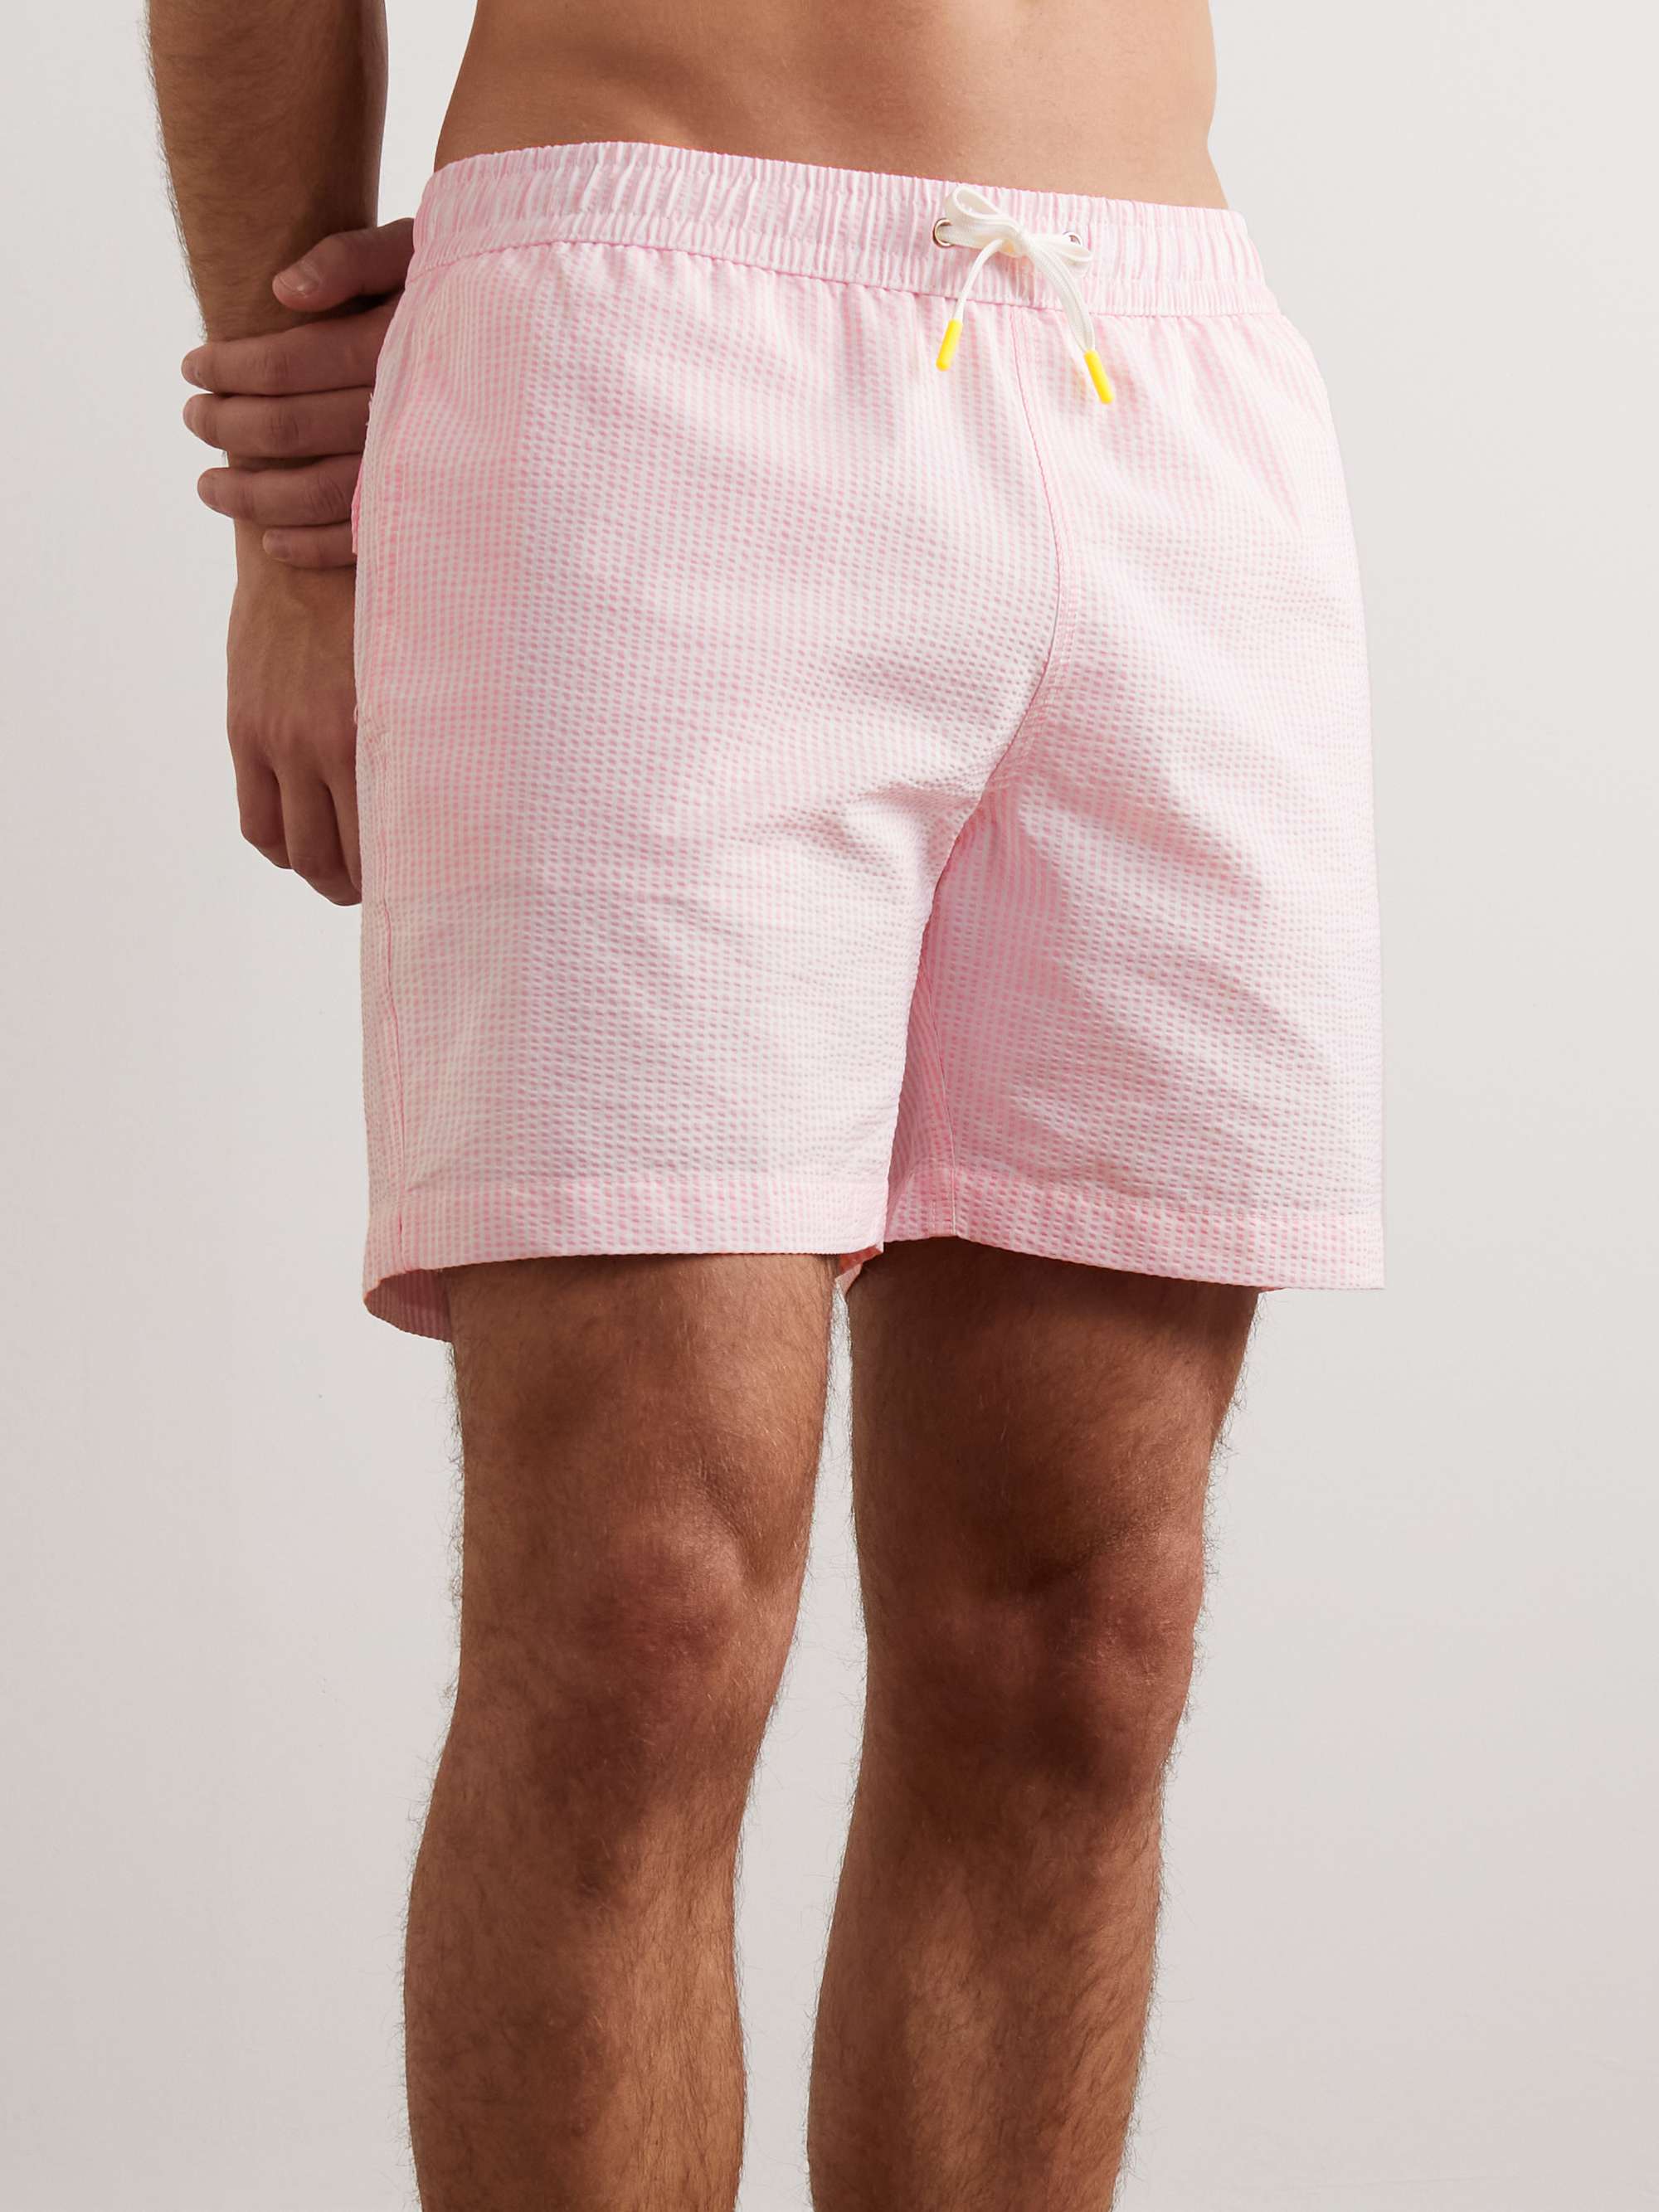 HARTFORD Straight-Leg Mid-Length Striped Seersucker Swim Shorts